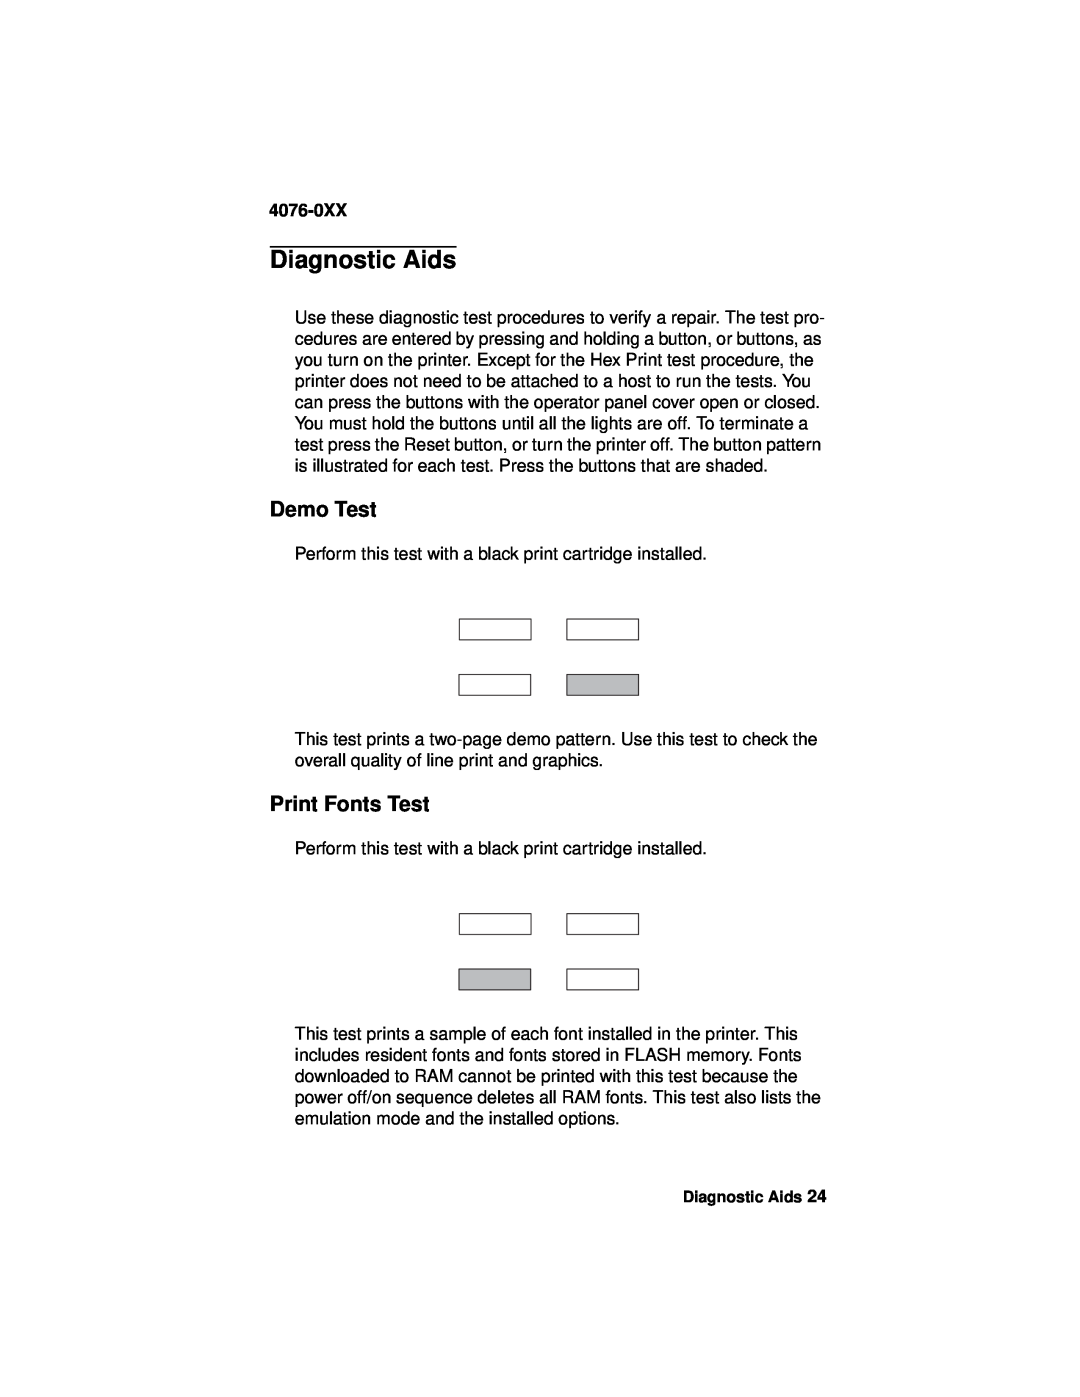 Lexmark 4076-0XX manual Diagnostic Aids, Demo Test, Print Fonts Test 